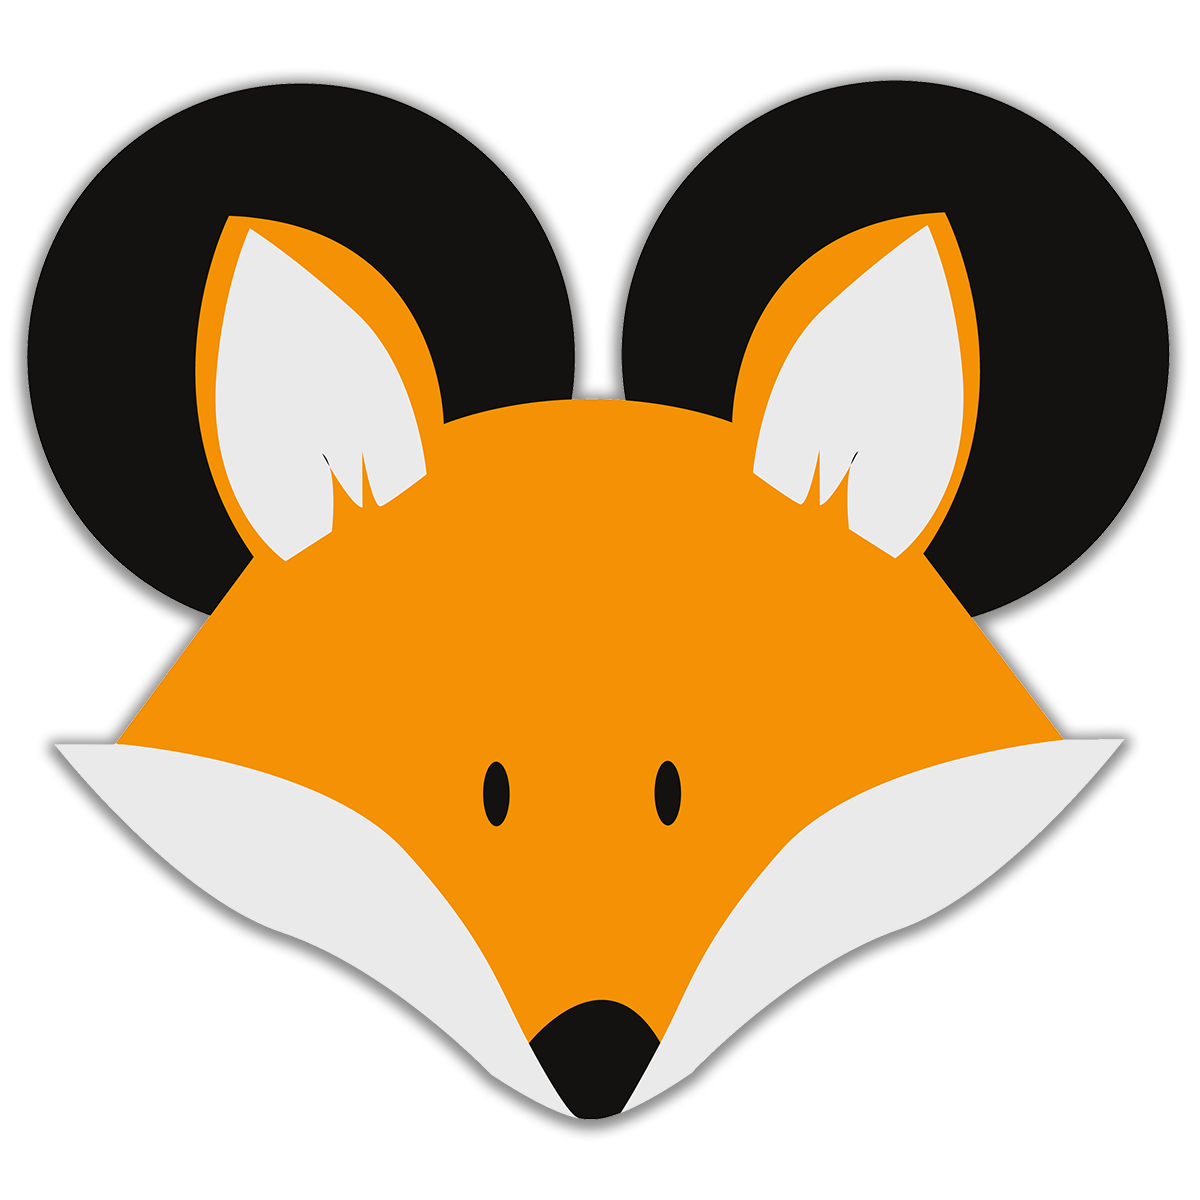 THE DISNEY FOX